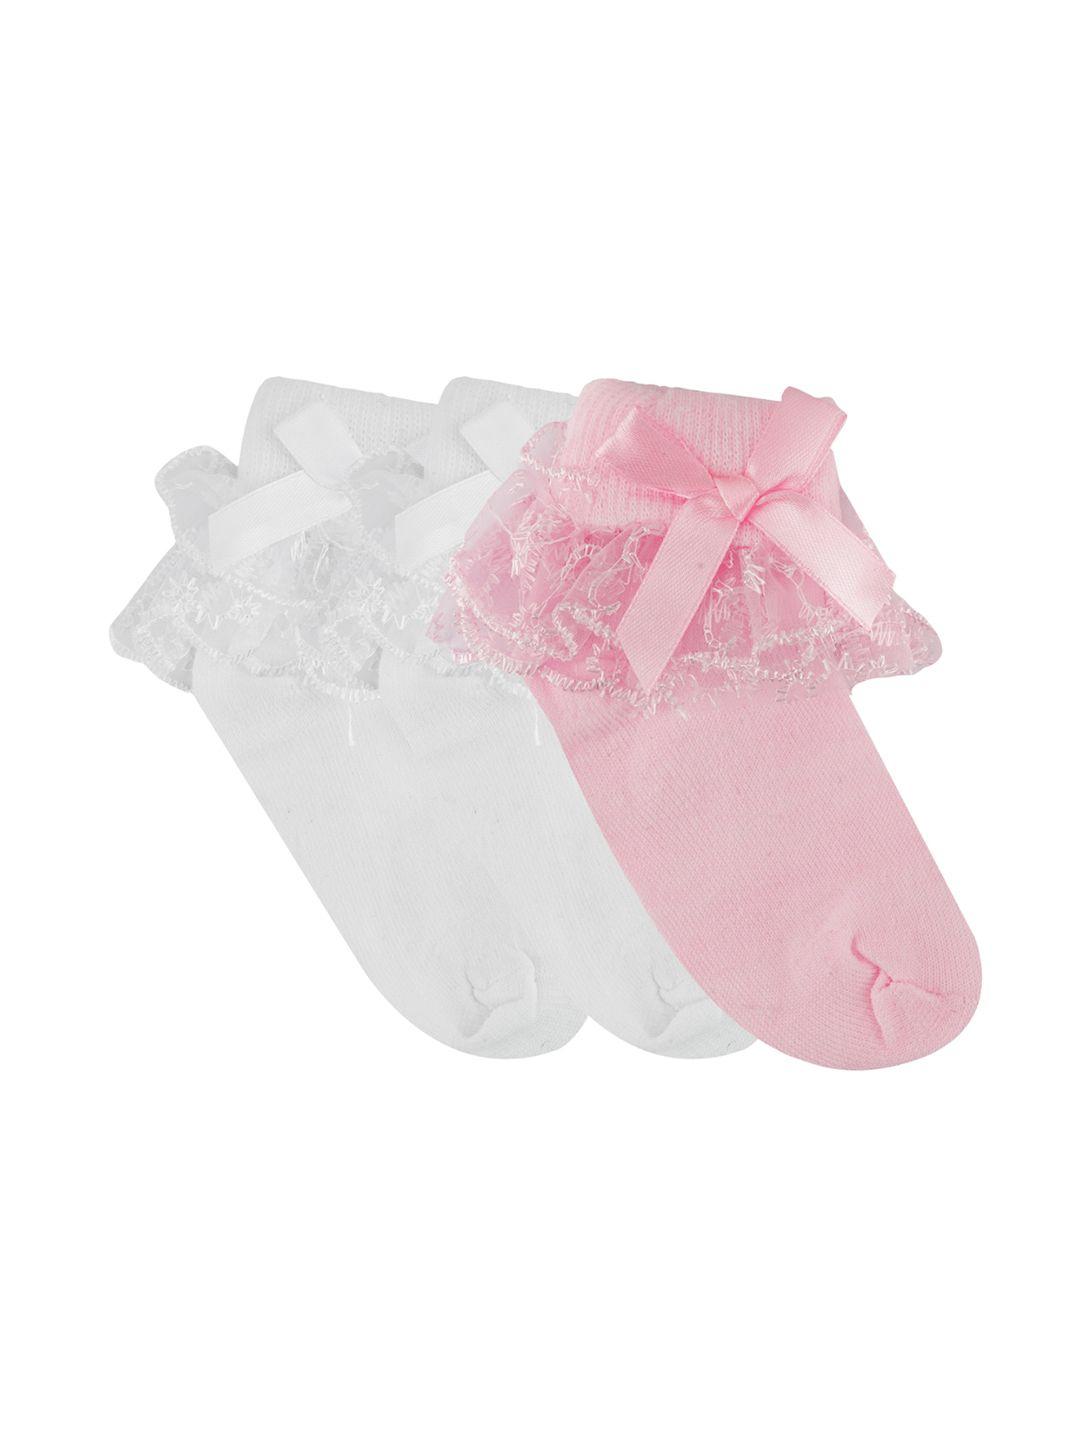 n2s next2skin girls pack of 3 pairs pink & white patterned cotton socks